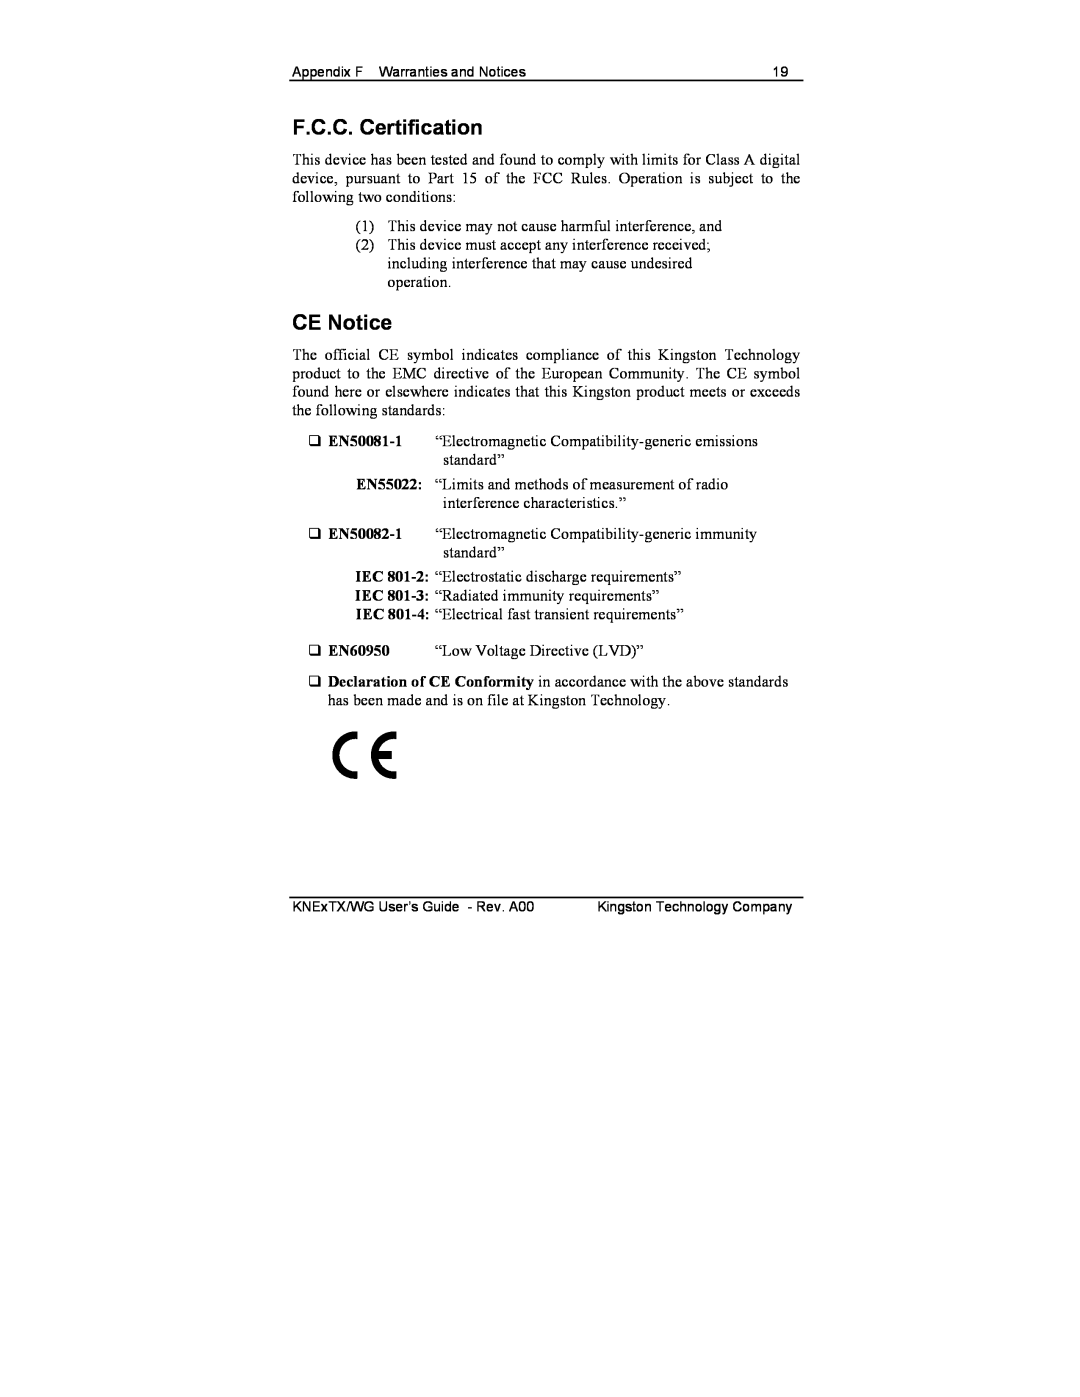 Kingston Technology KNE8TX/WG manual F.C.C. Certification, CE Notice 